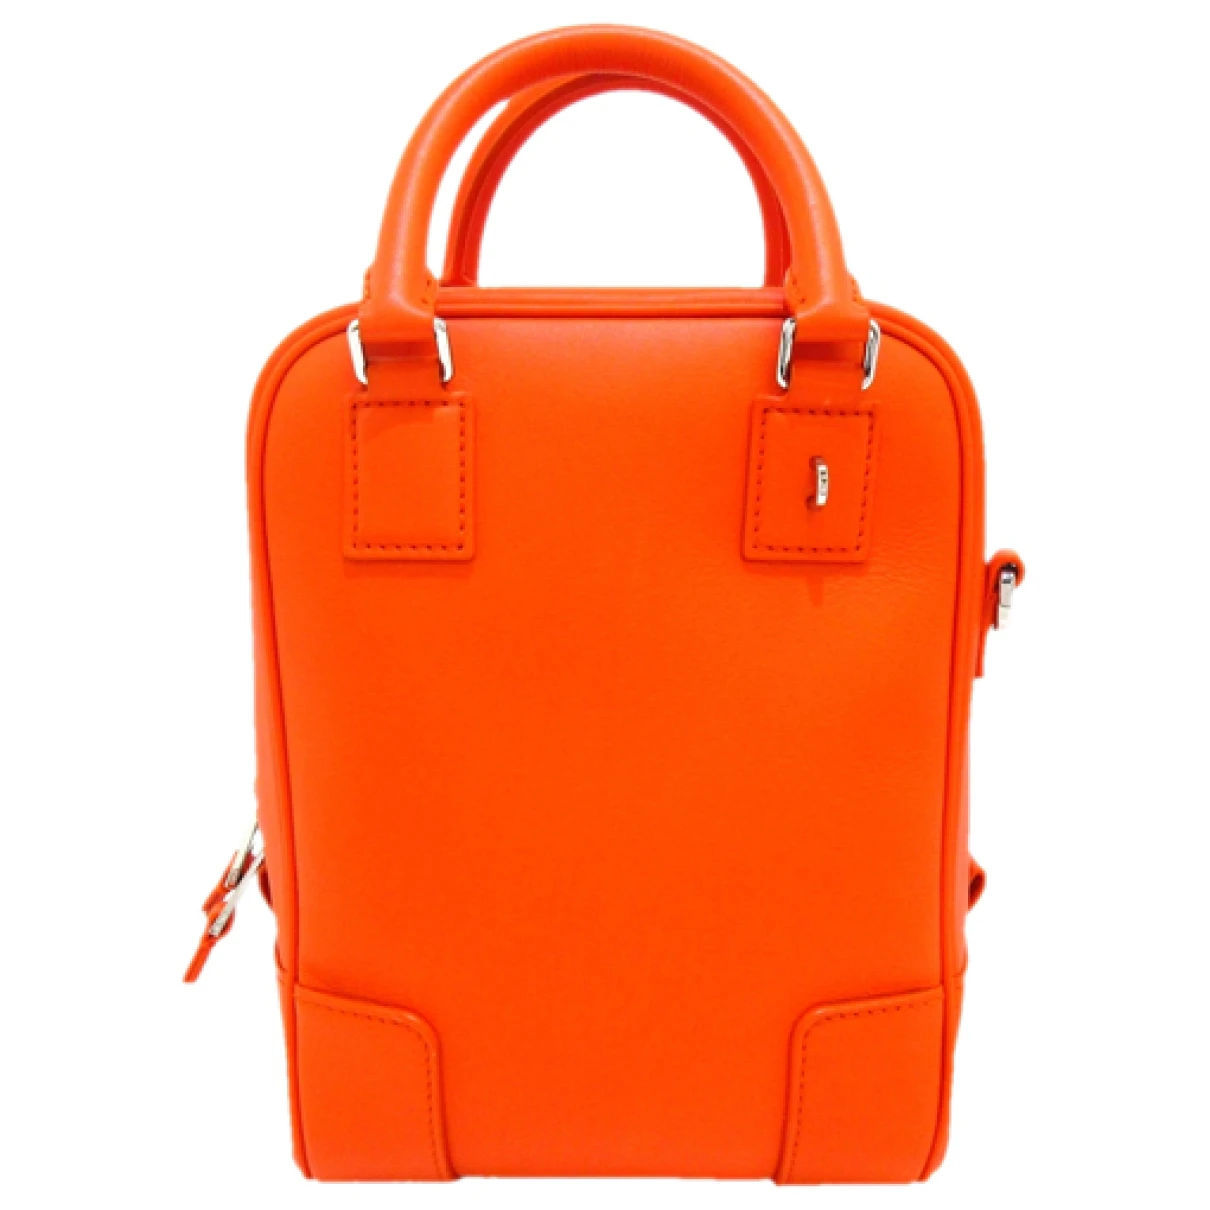 Pre-owned Loewe Amazona Leather Handbag In Orange